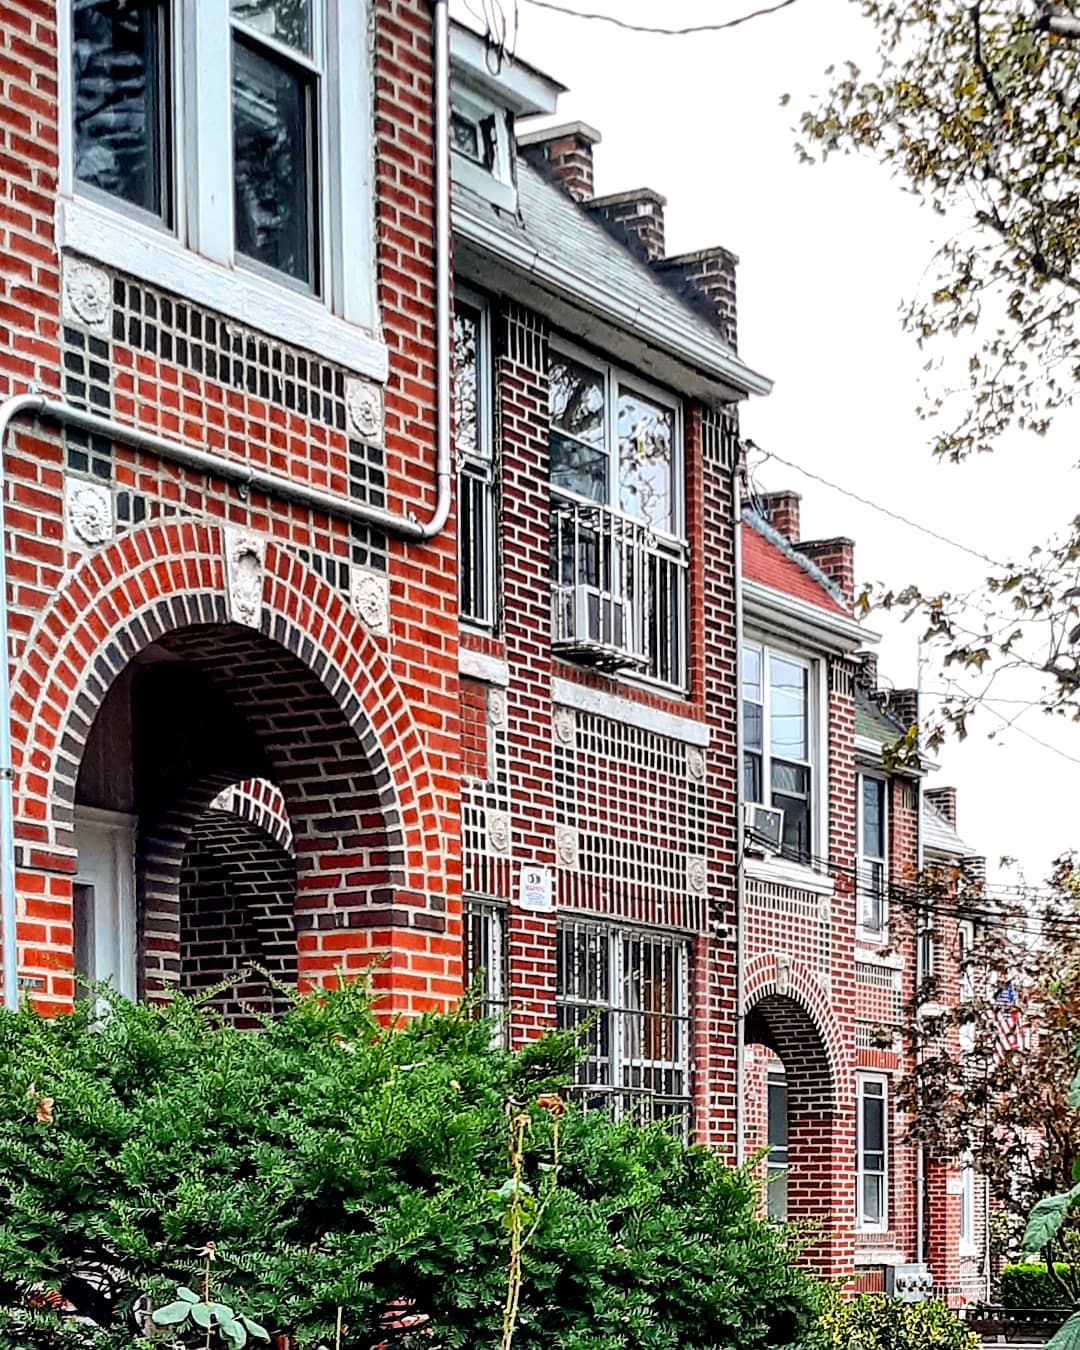 Red brick house with white trim. Photo by Instagram user @rochdalian